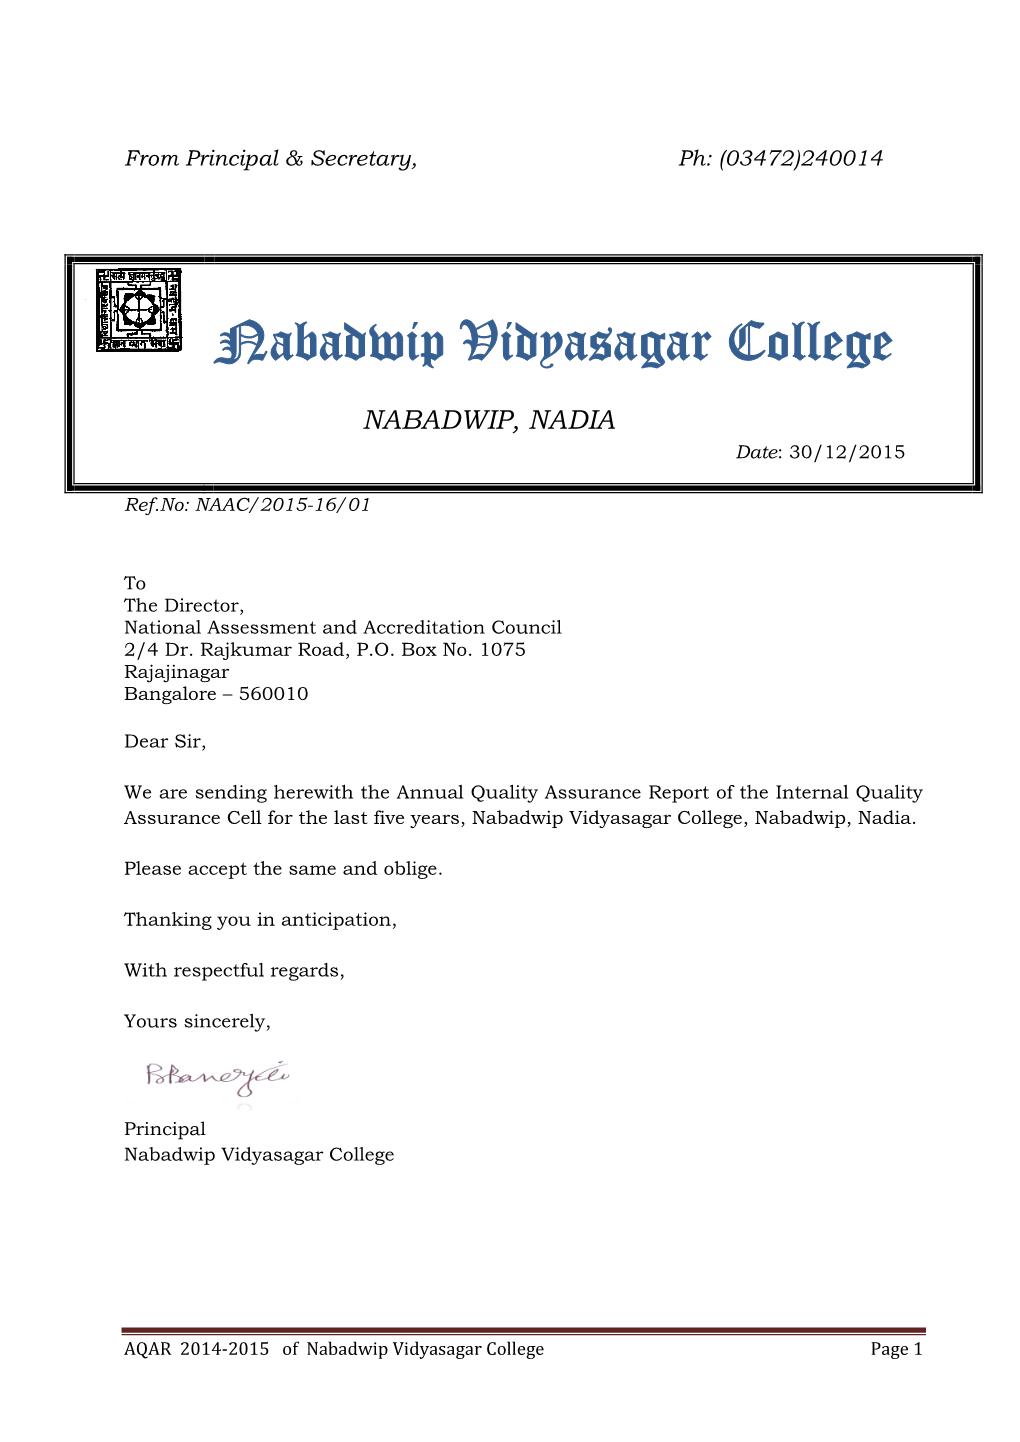 AQAR 2014-2015 of Nabadwip Vidyasagar College Page 1